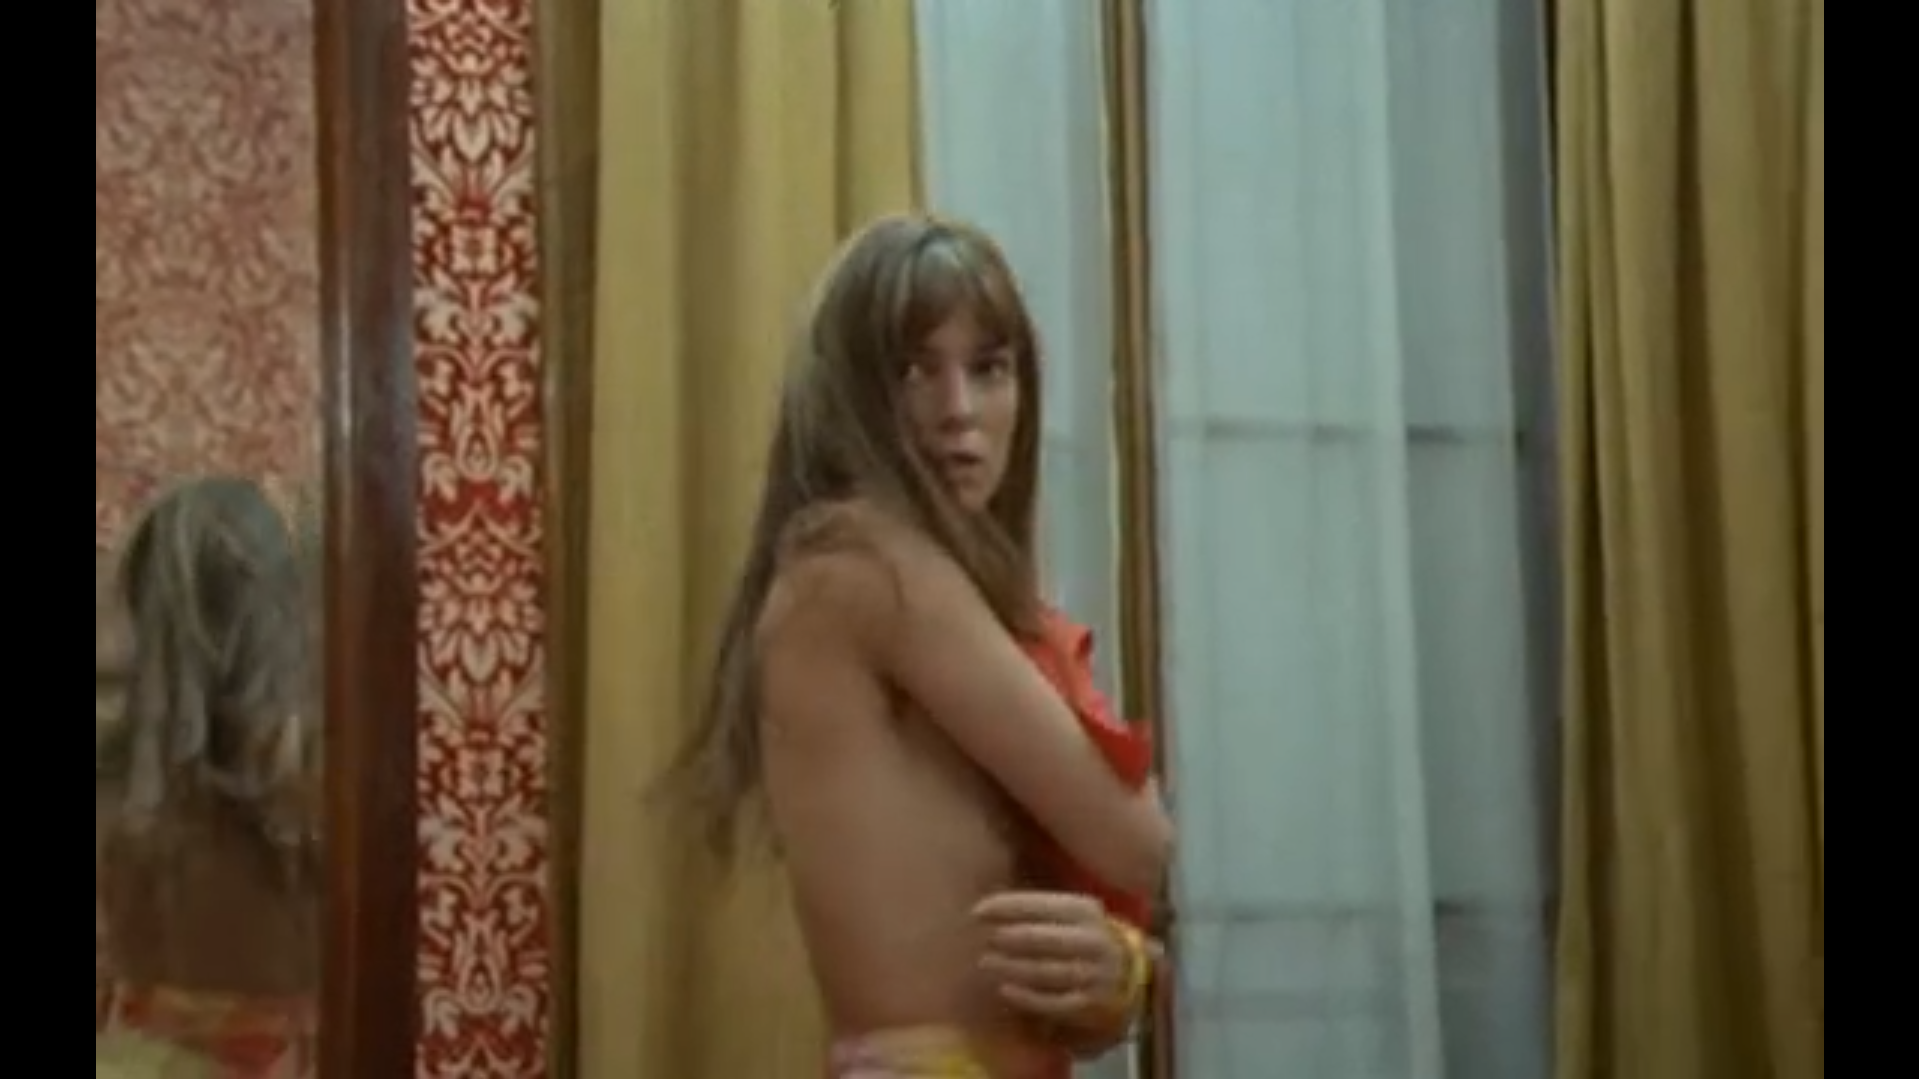 Boobs in the film Le Mouton enrag (1974) - NSFW, Boobs, Movies, Drama, Comedy, 1974, Longpost